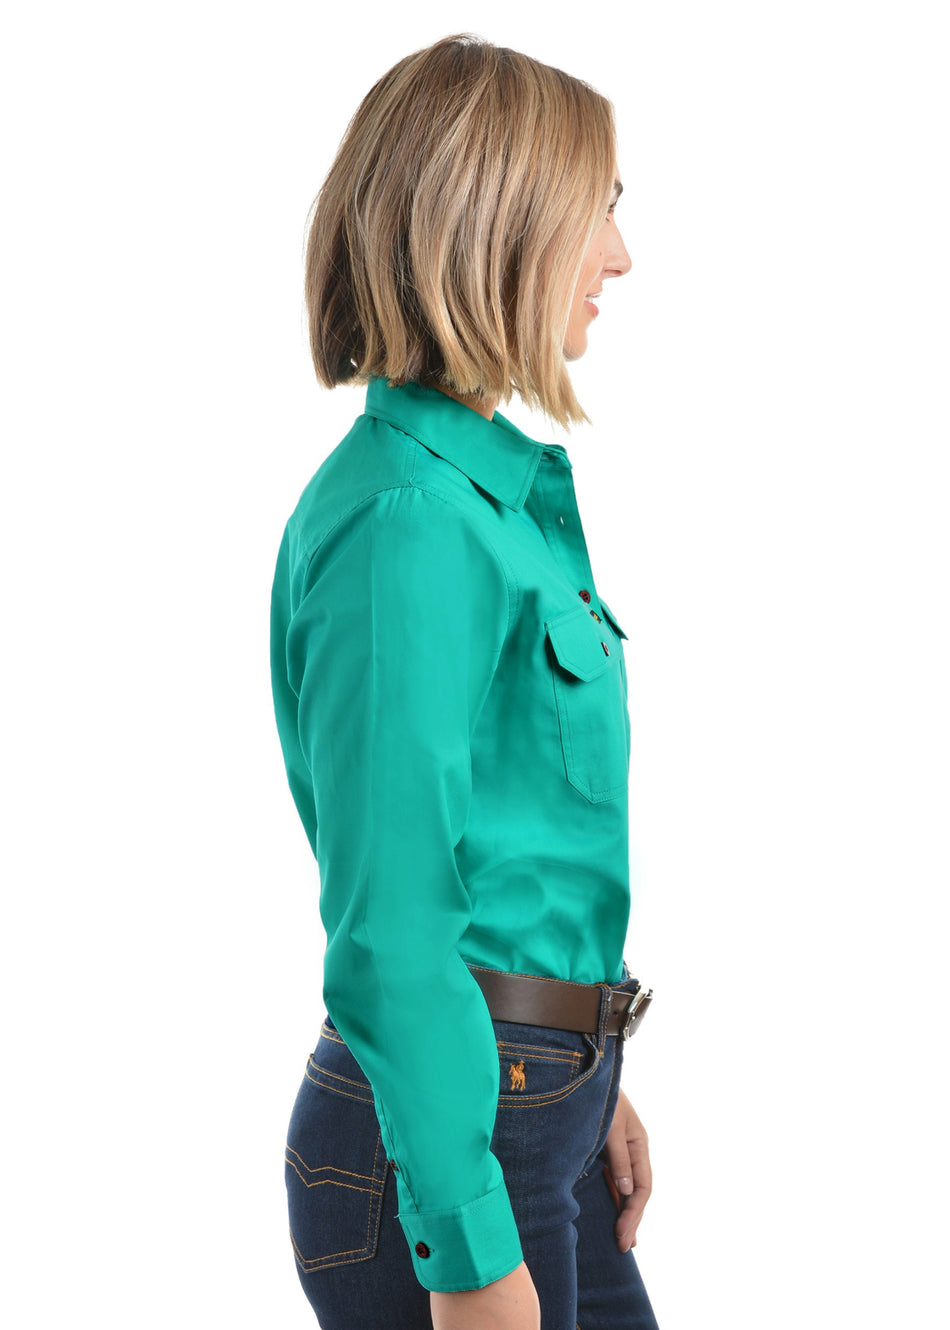 Hard Slog Women's Work Shirt in Turquoise